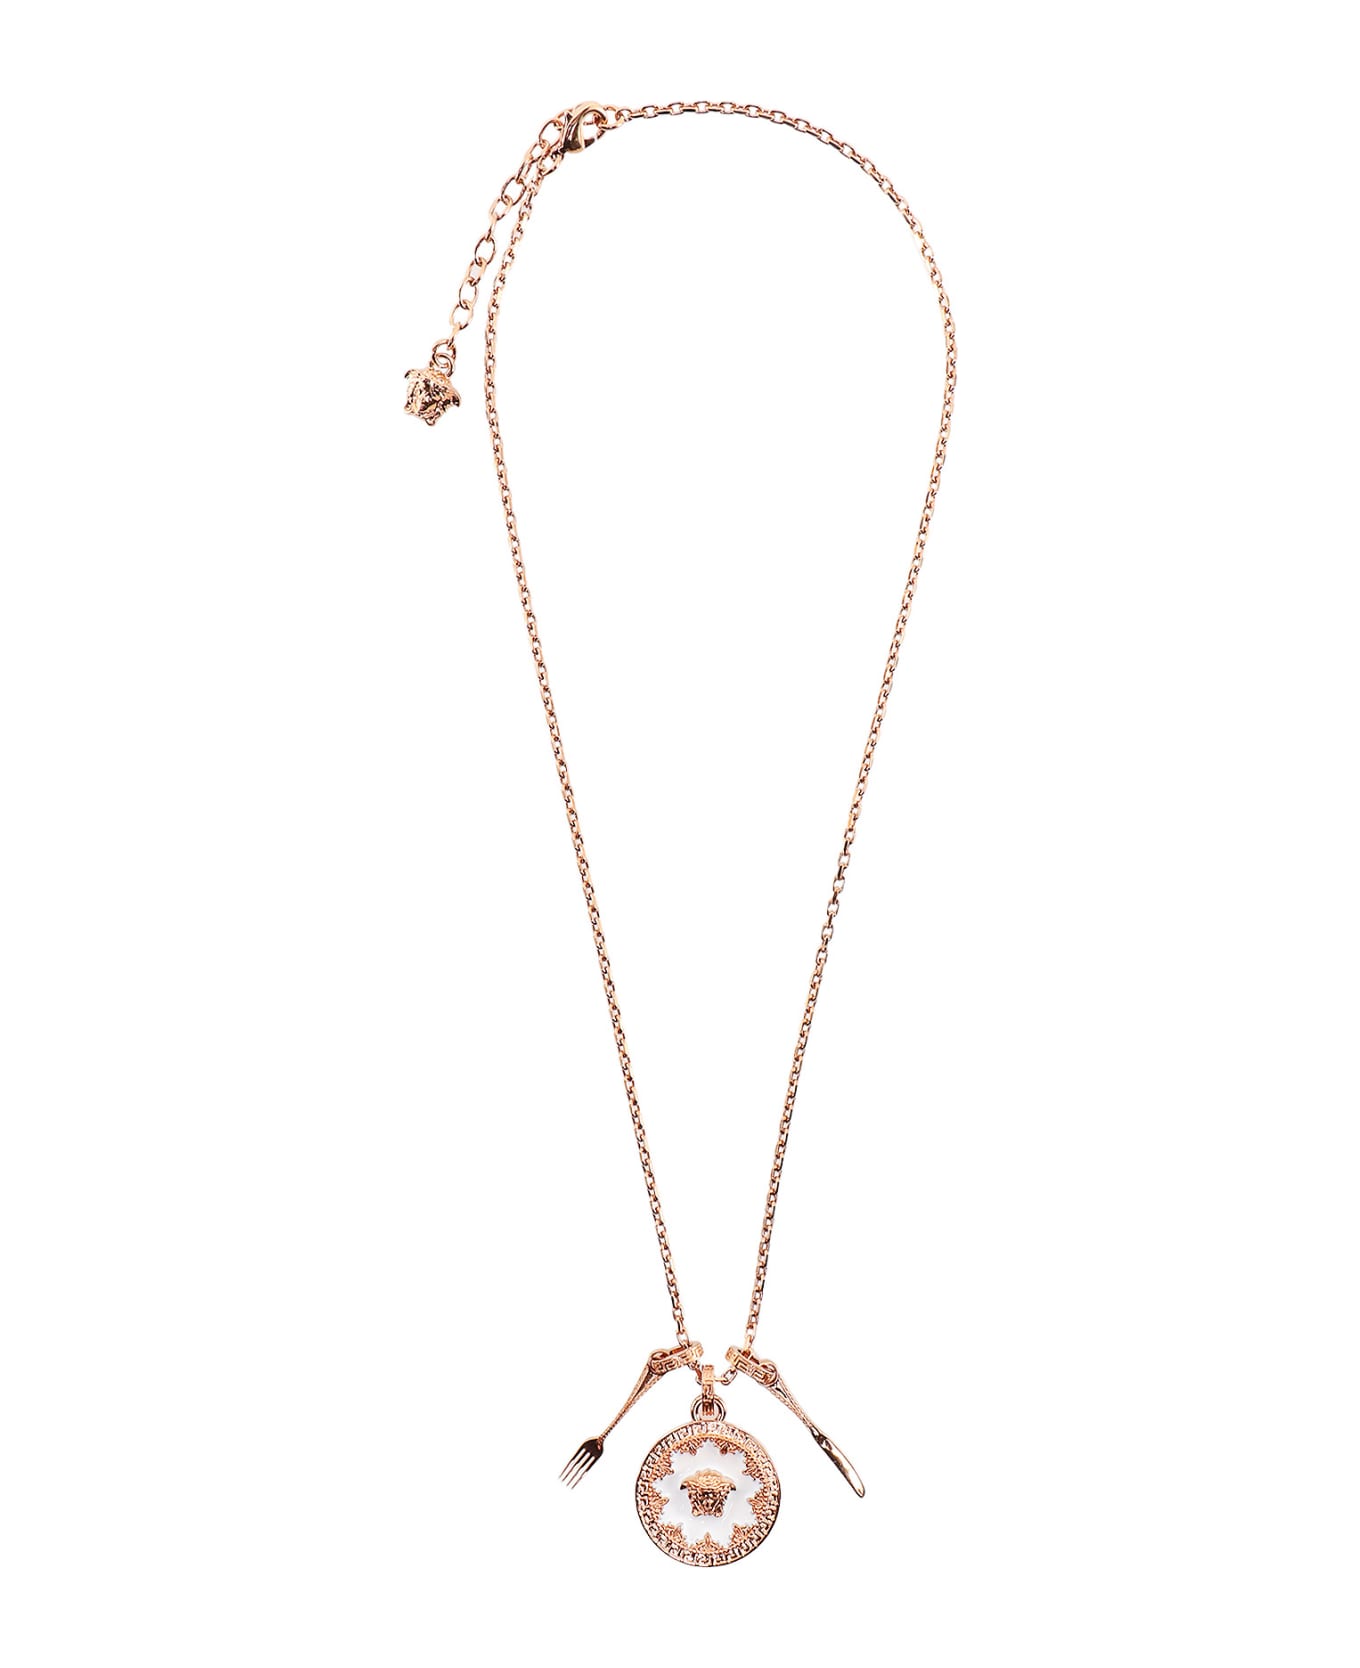 Versace Medusa Head Pendant Necklace - Gold